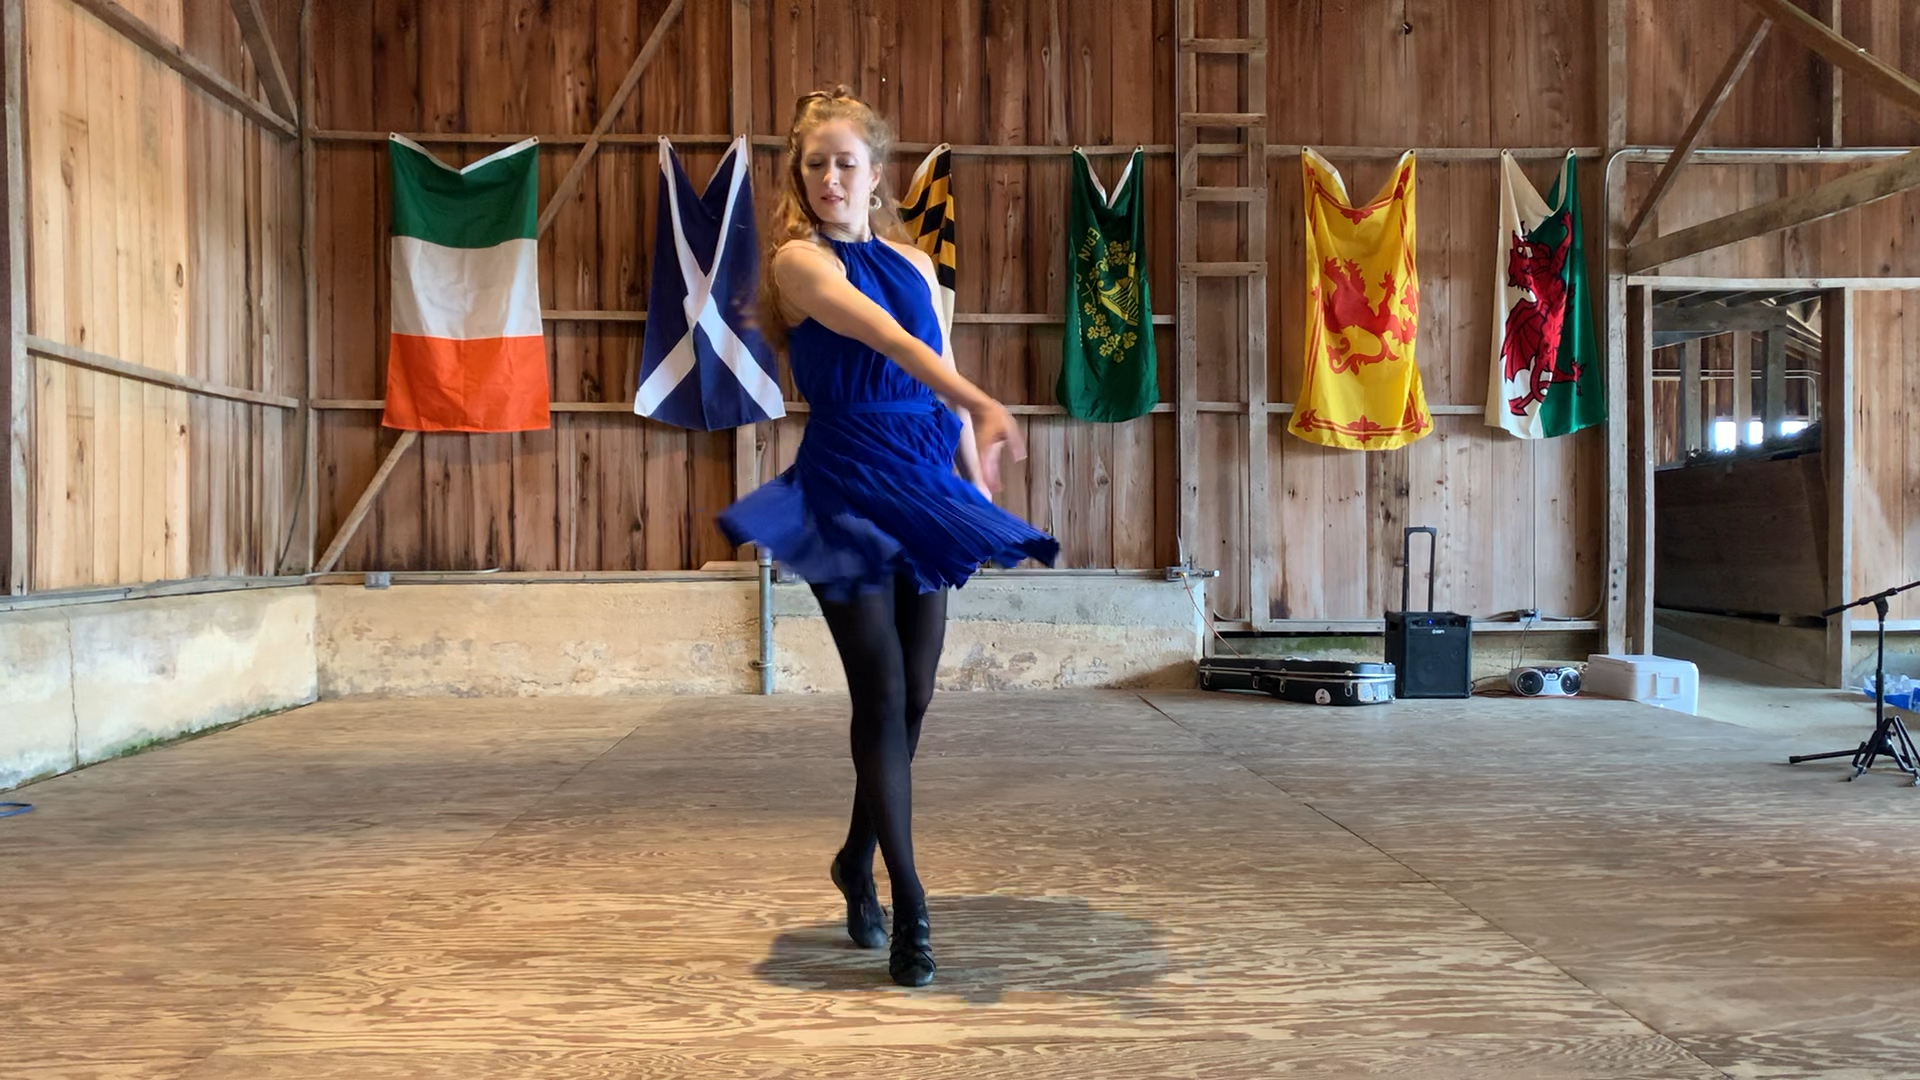 Festival style Irish dance showcase at the Southern Maryland Celtic Festival